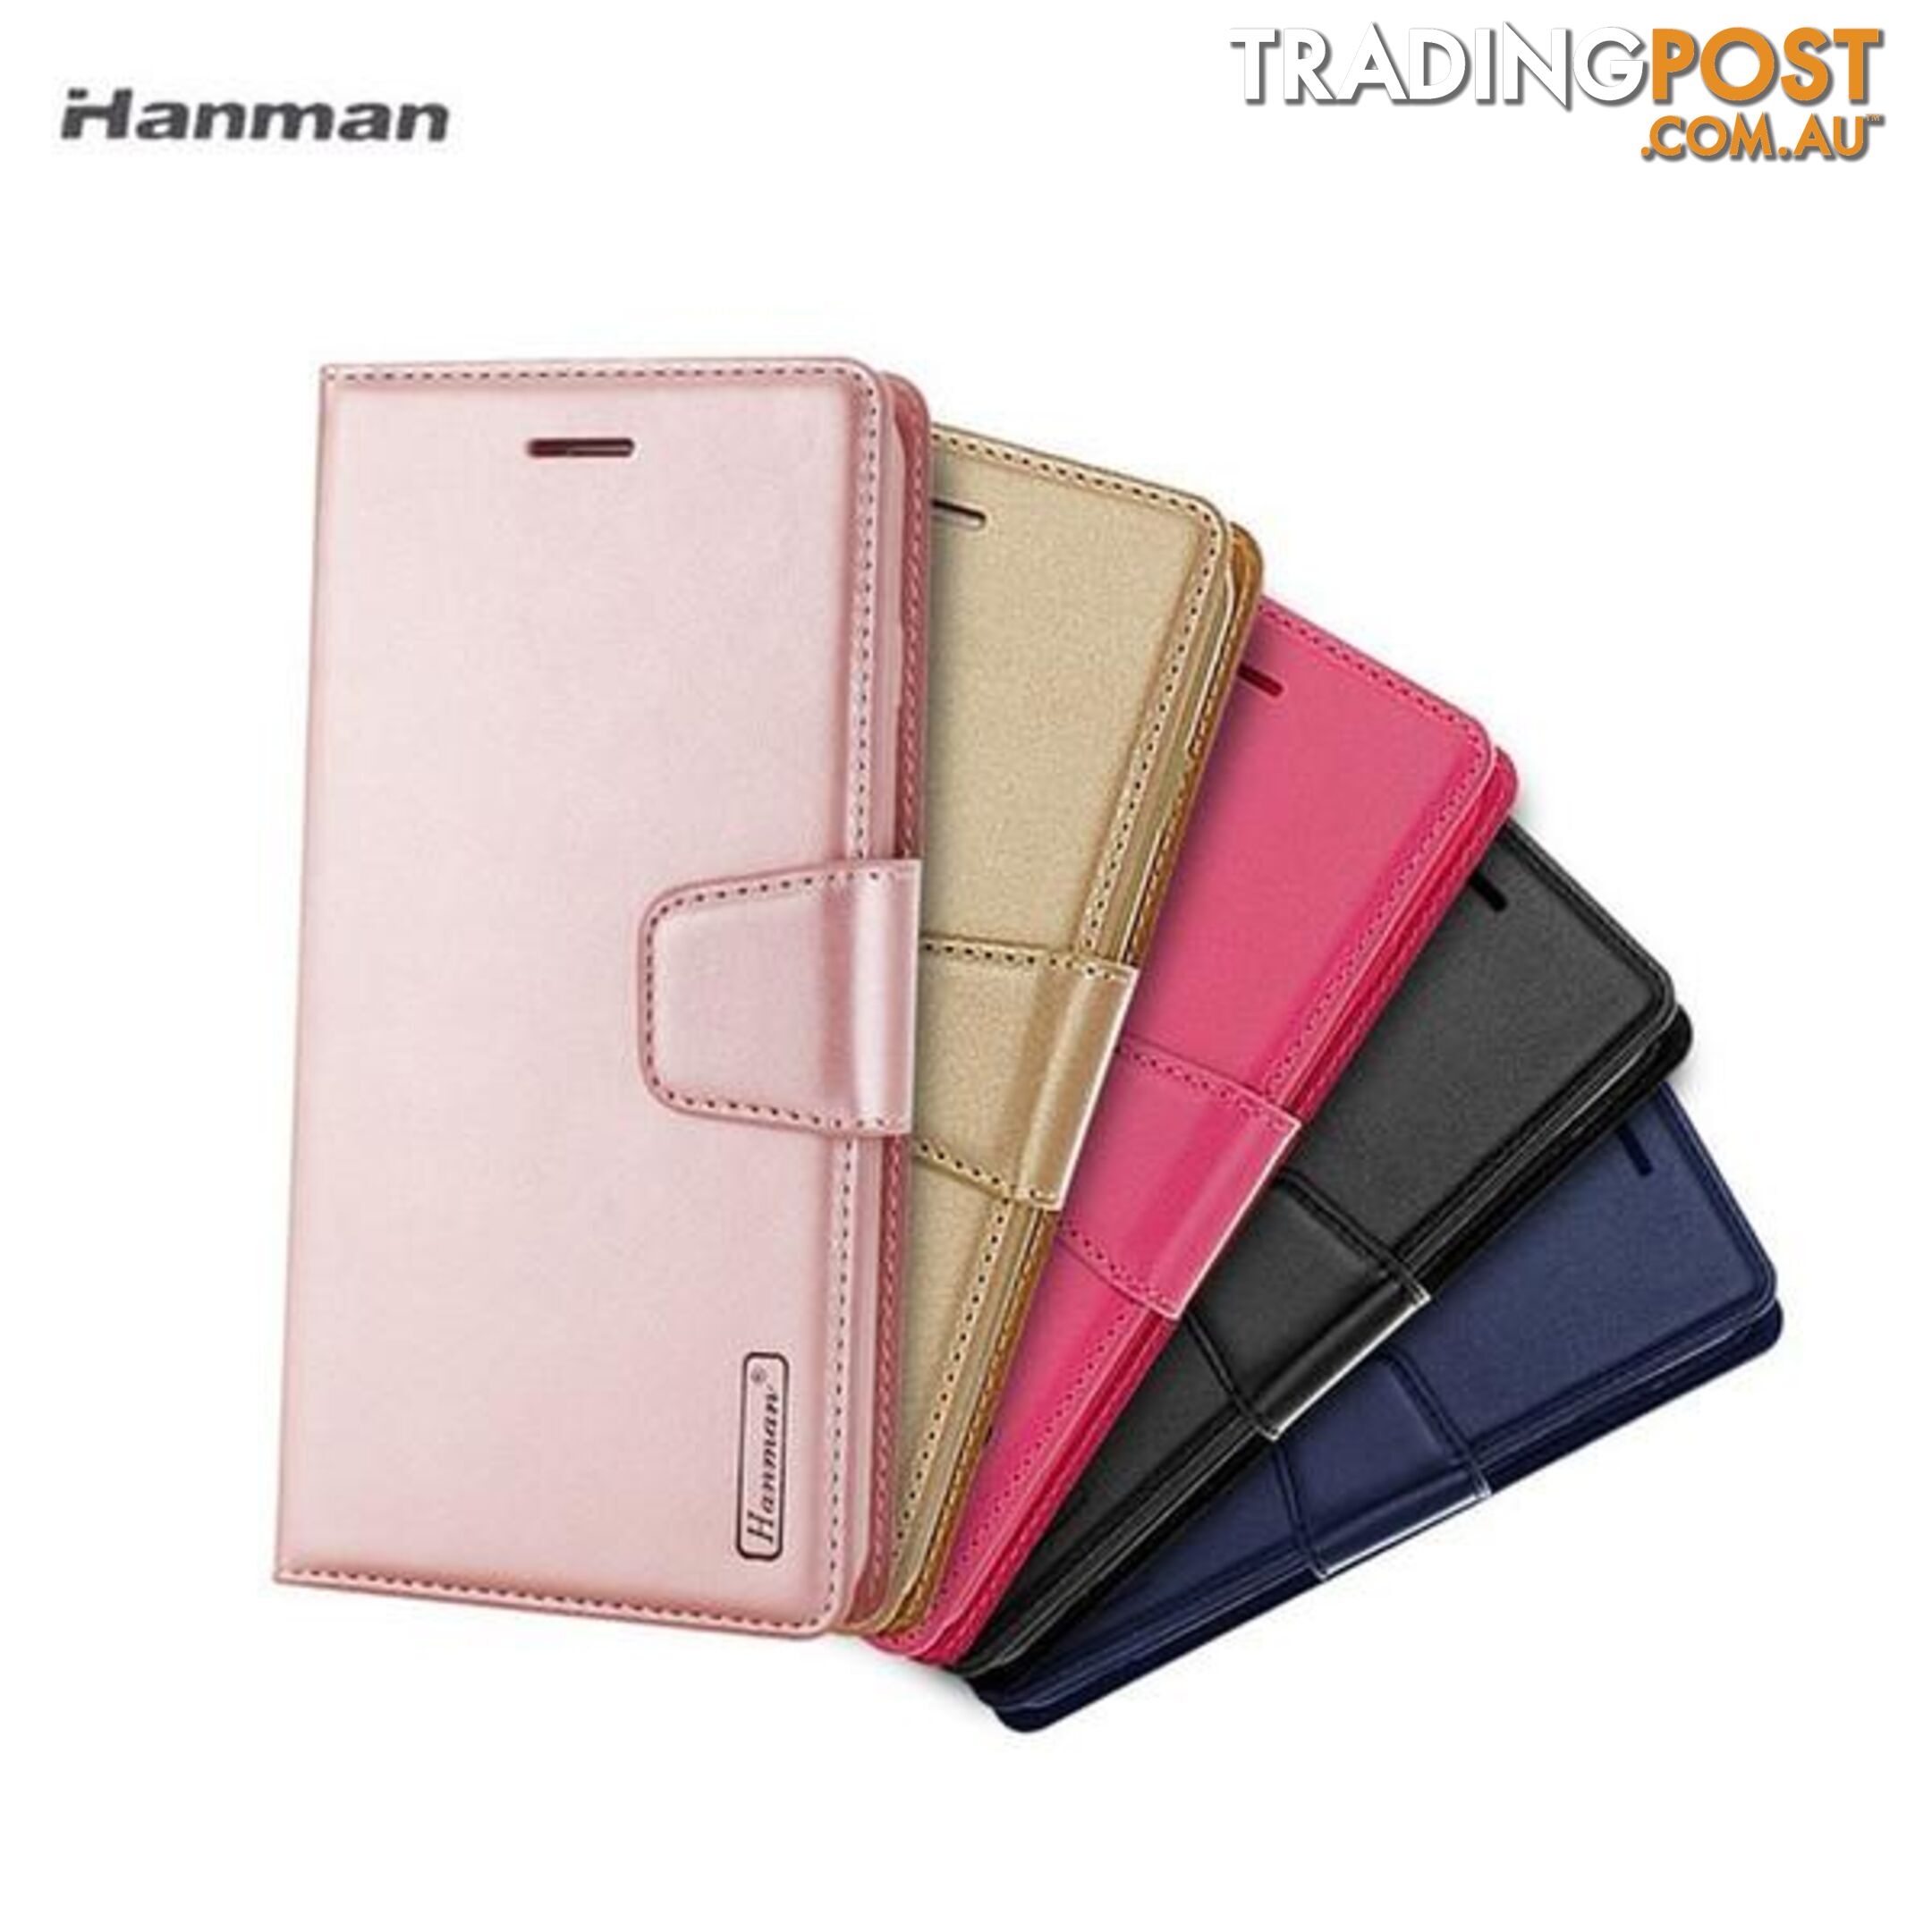 S10 Hanman Wallet Style Case - 100999 - Cases